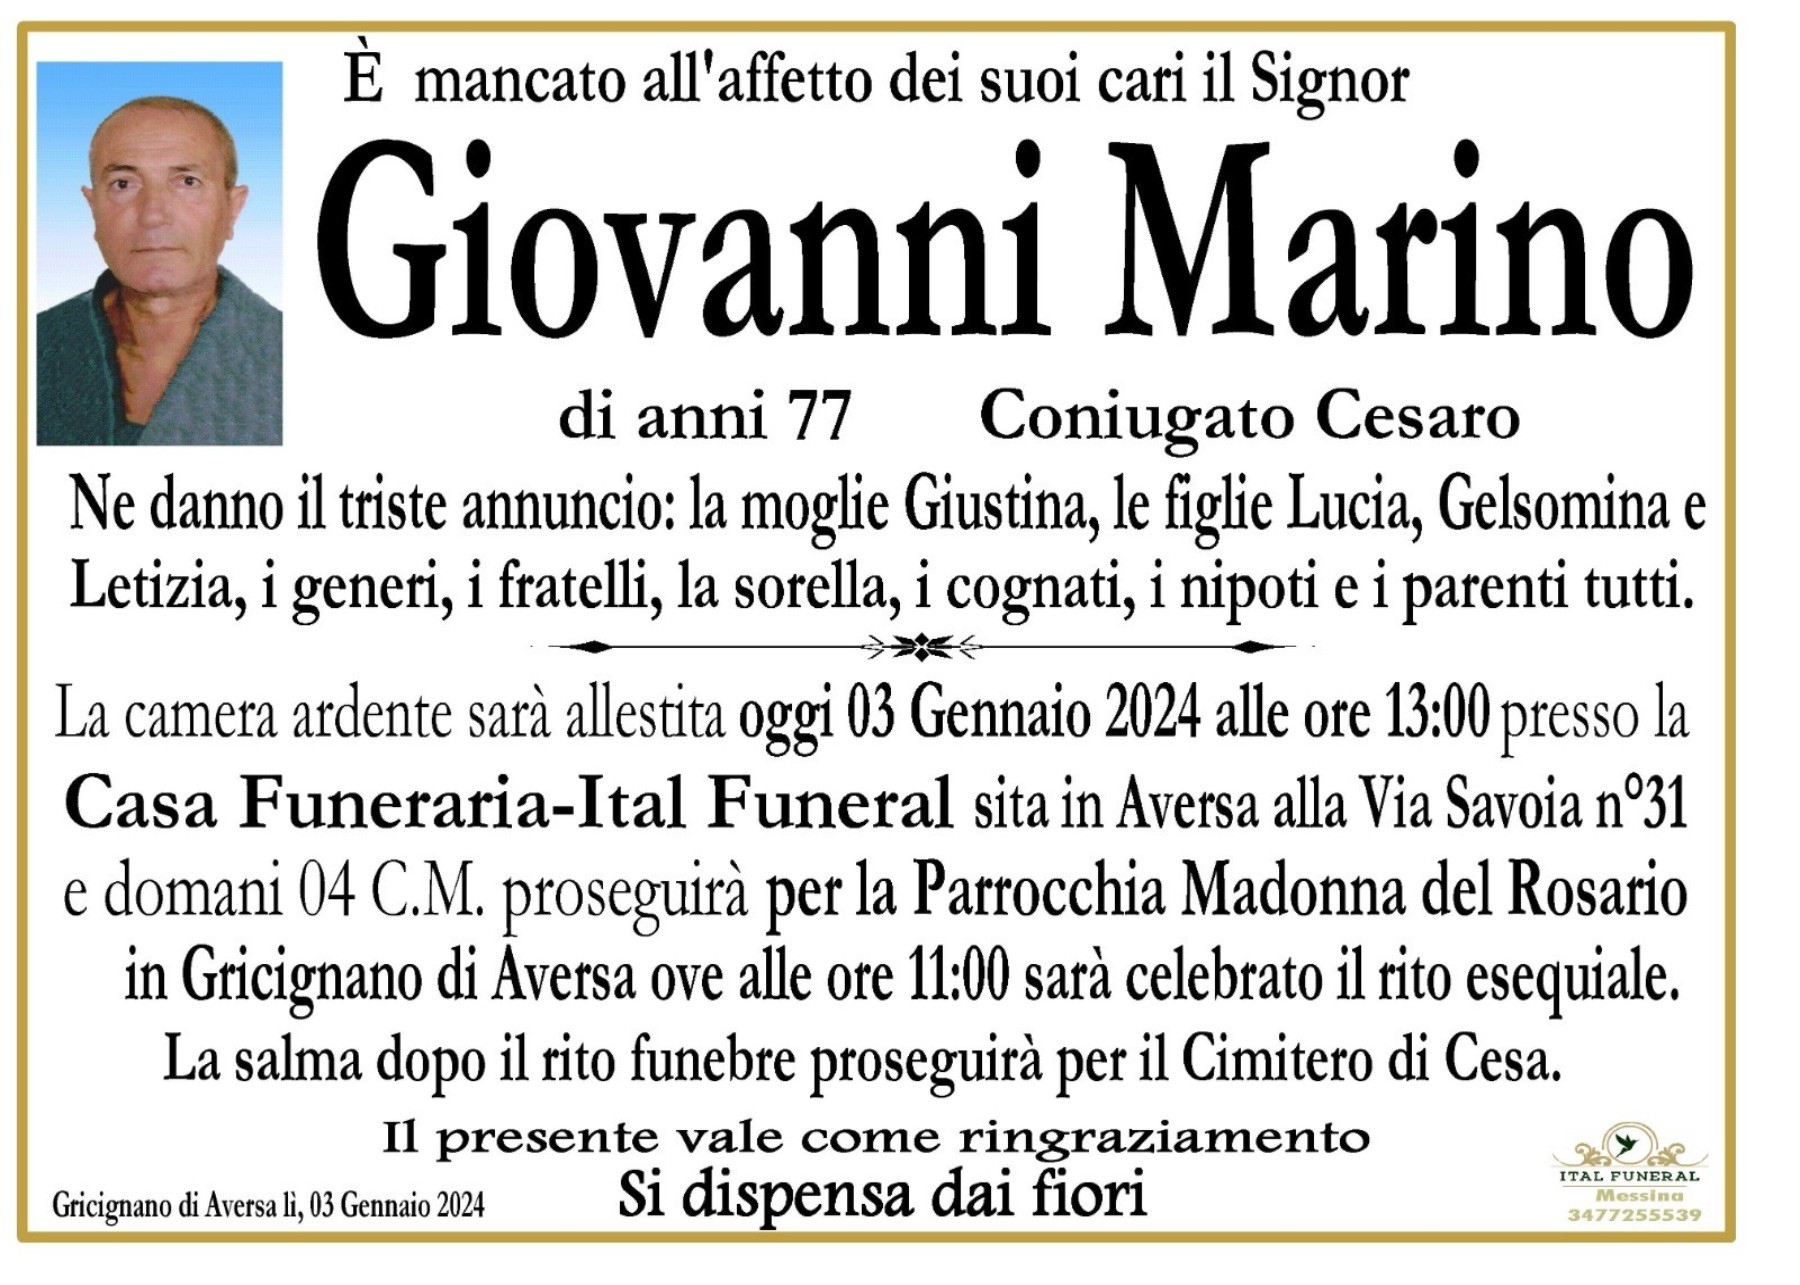 Giovanni Marino